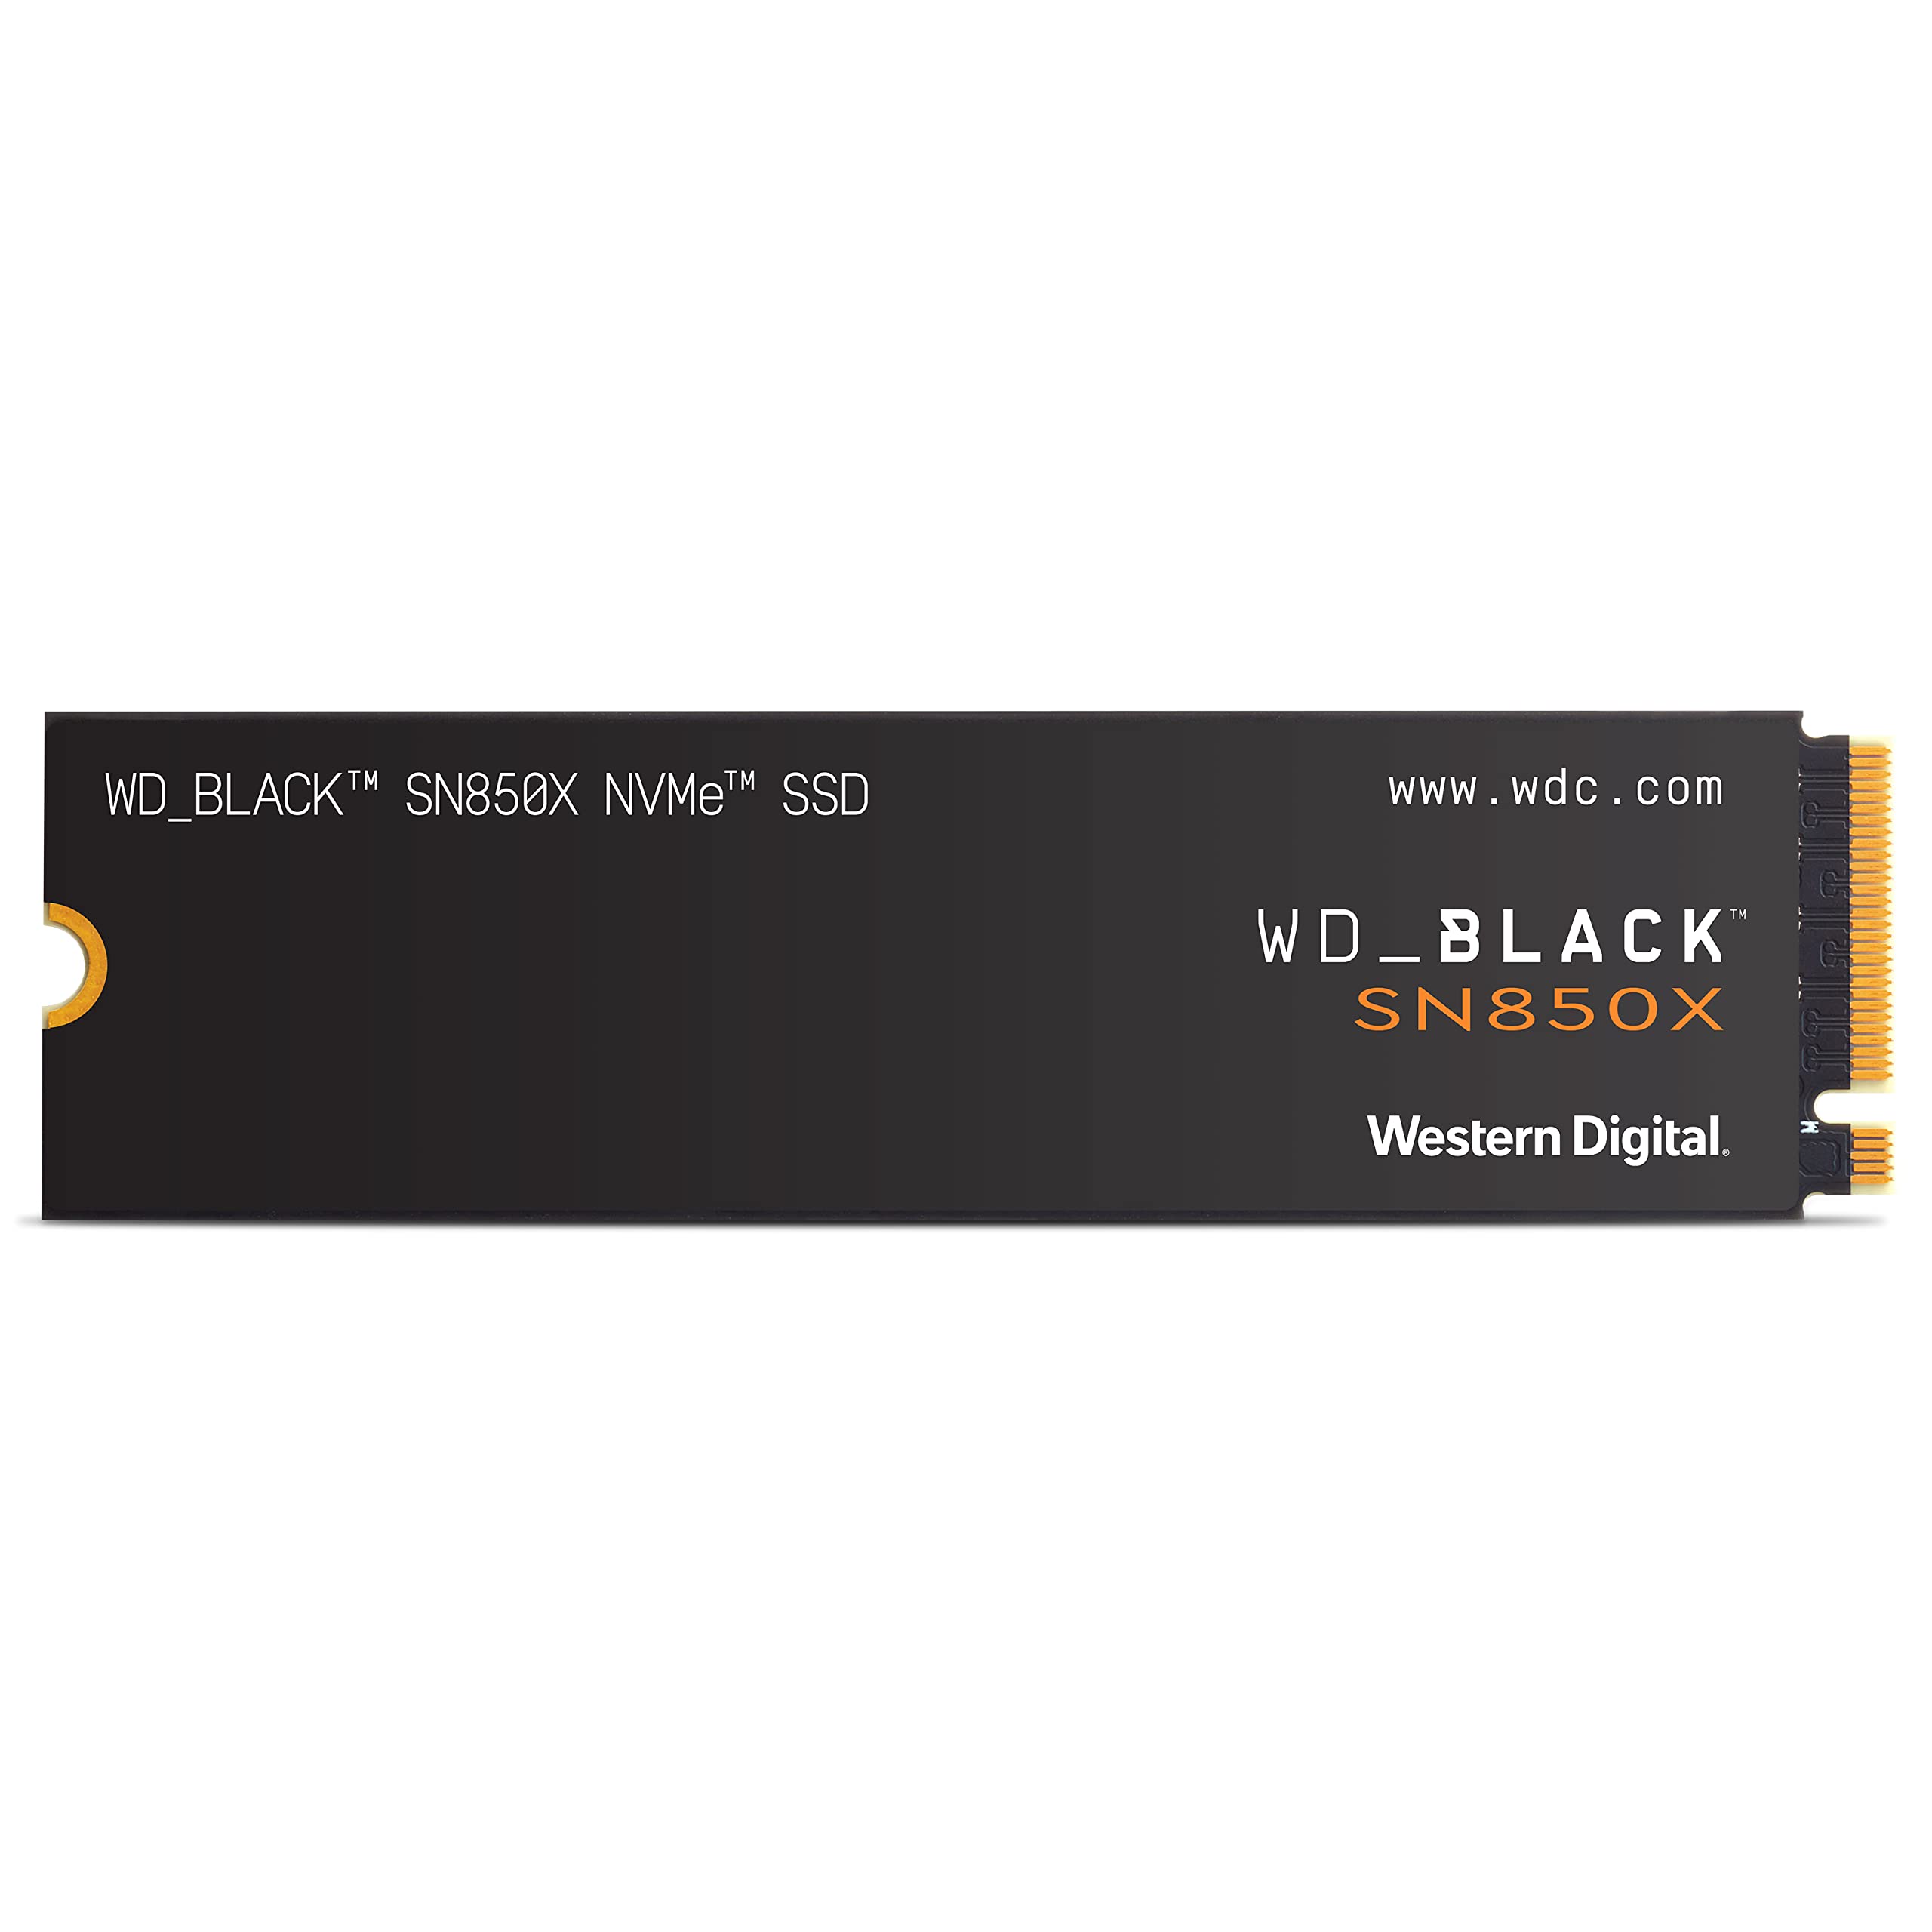 WD_BLACK 2TB SN850X NVMe Internal Gaming SSD  from Amazon.com $89.99